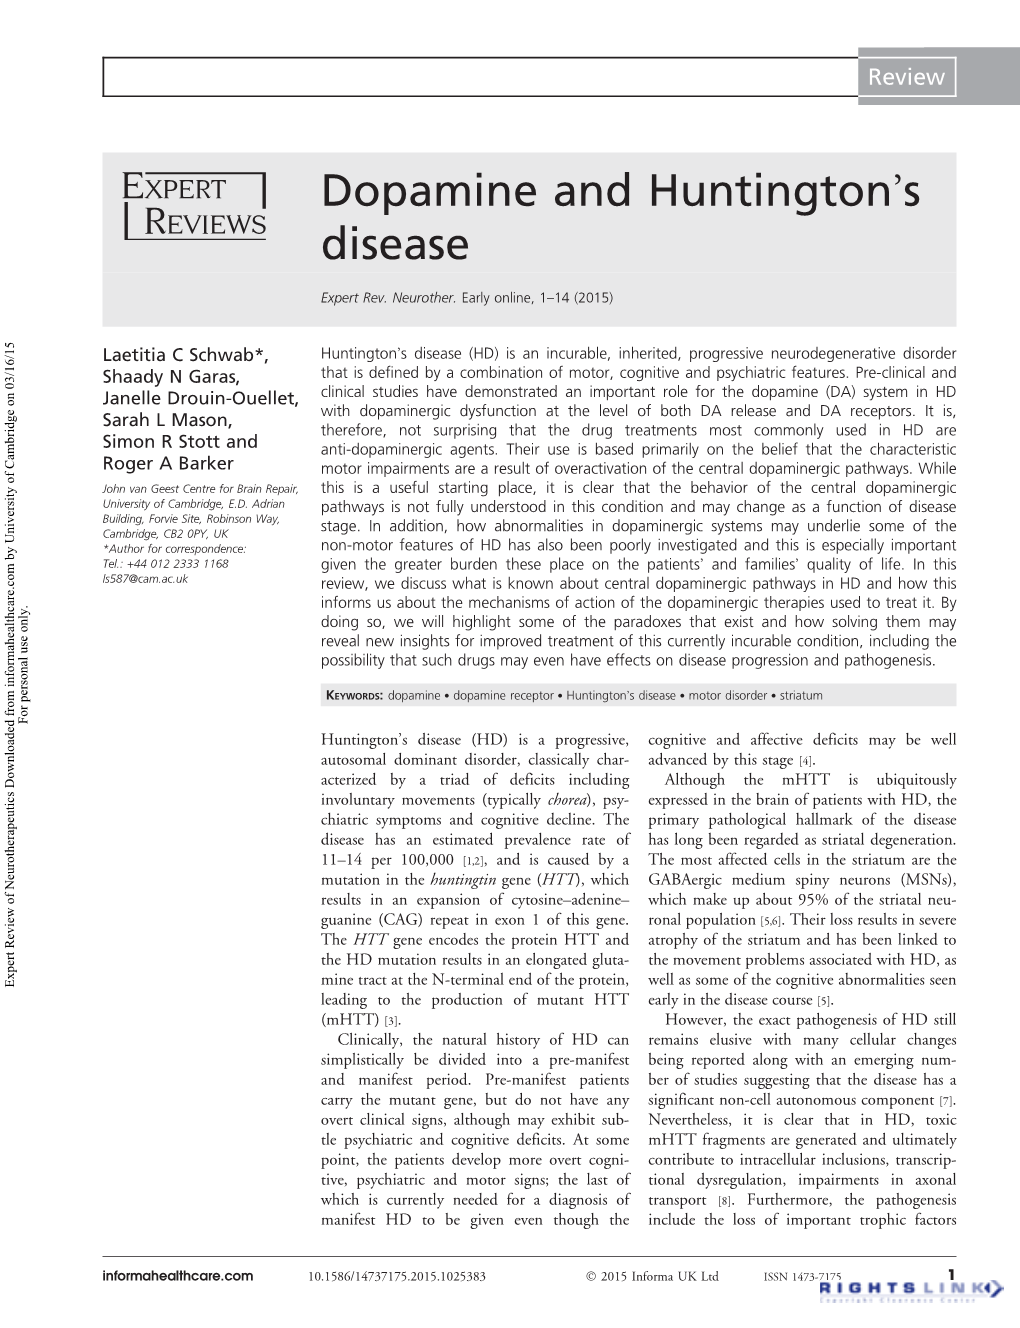 Dopamine and Huntington's Disease